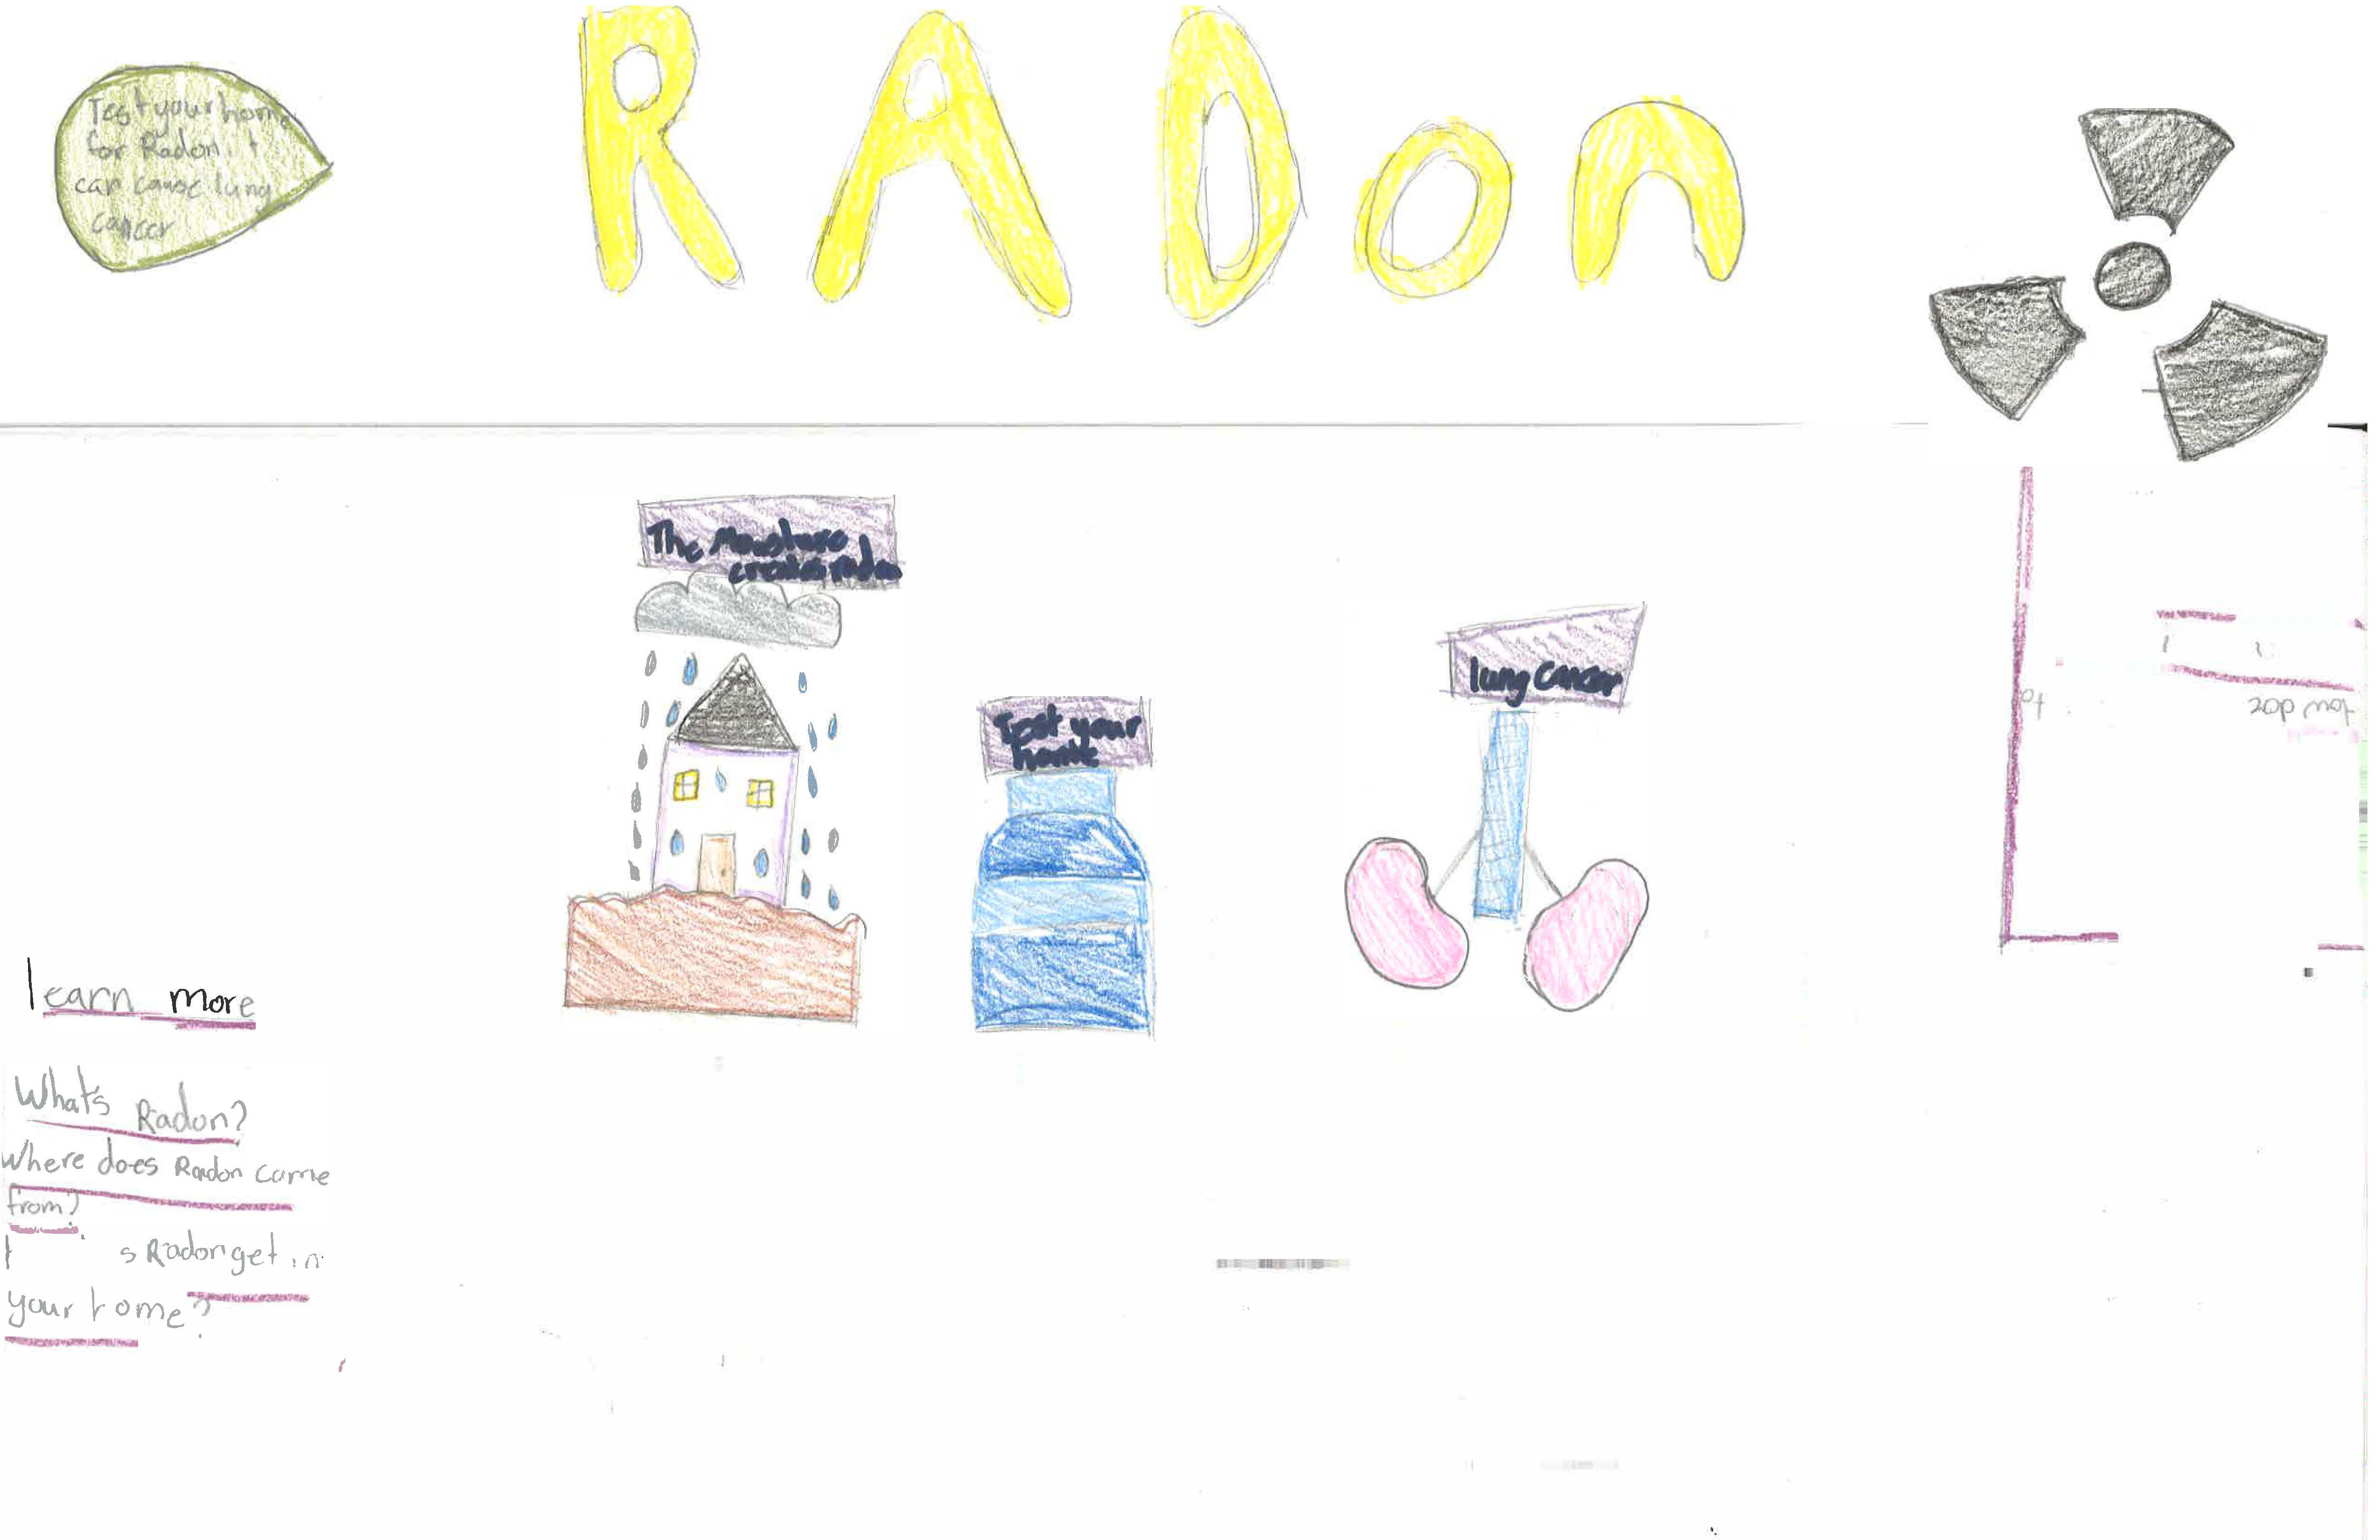 2022 Radon Poster Contest Entry